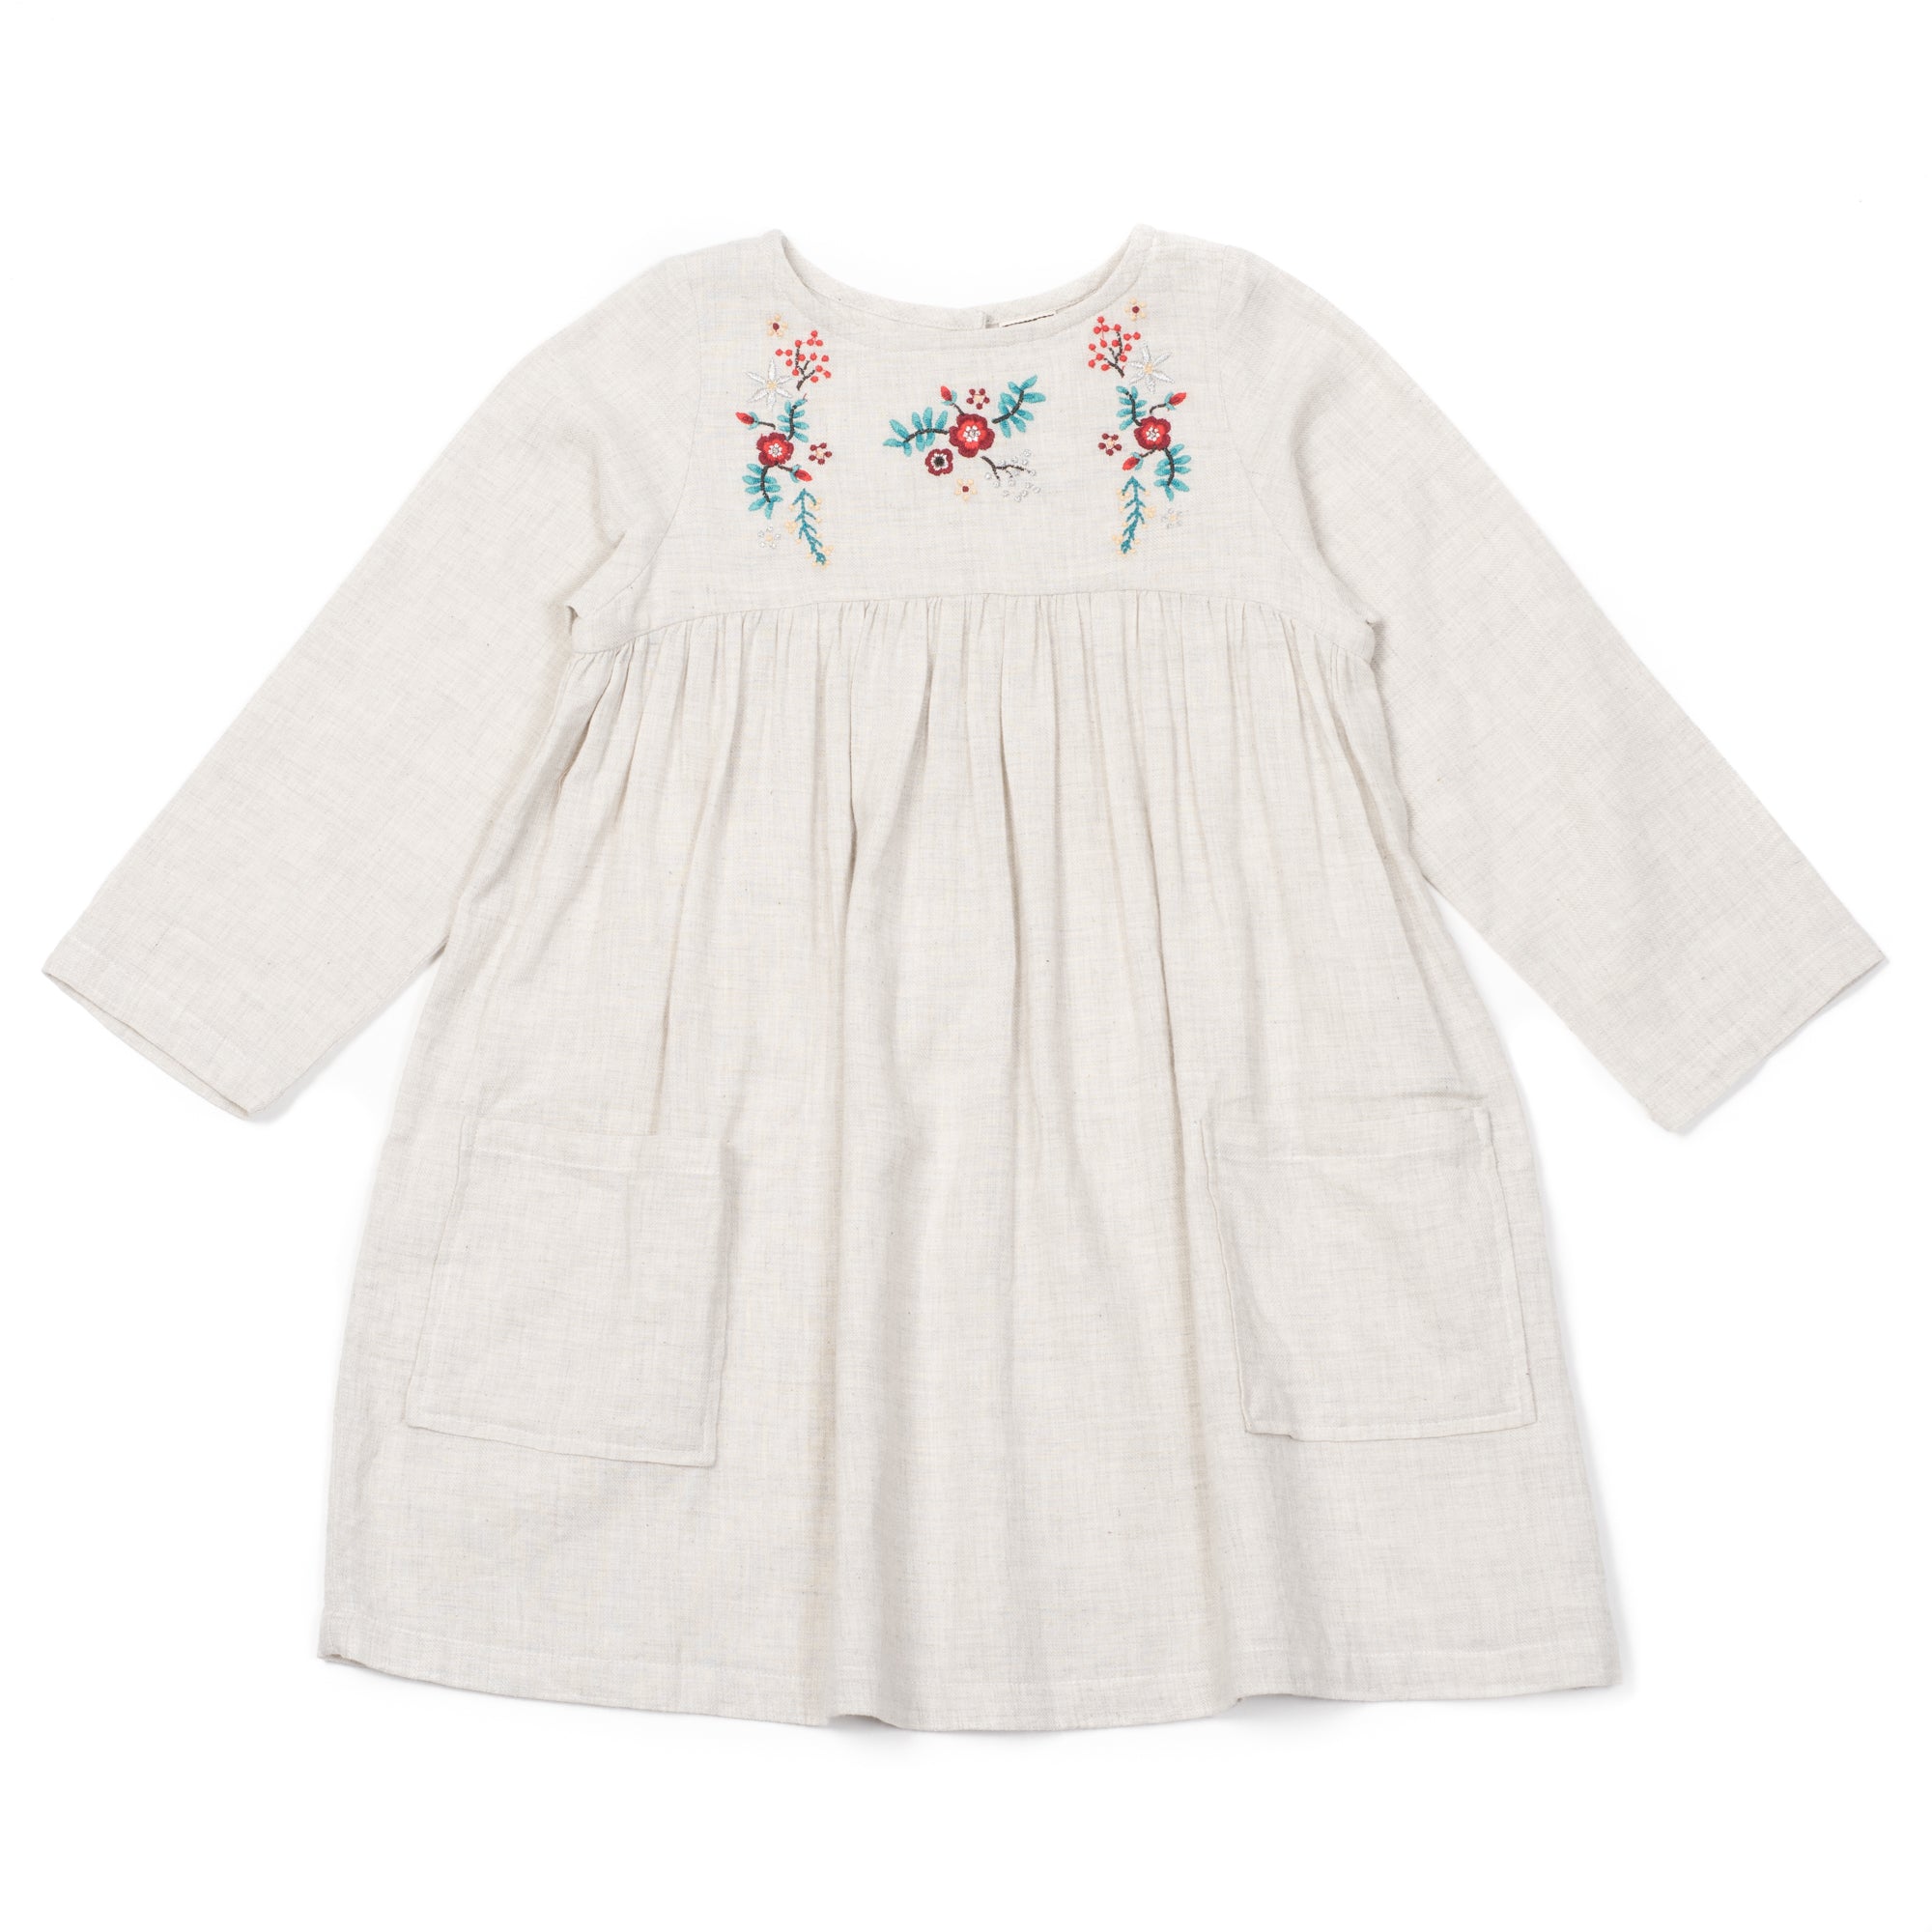 Girls Mastic Cotton Embroidery Dress